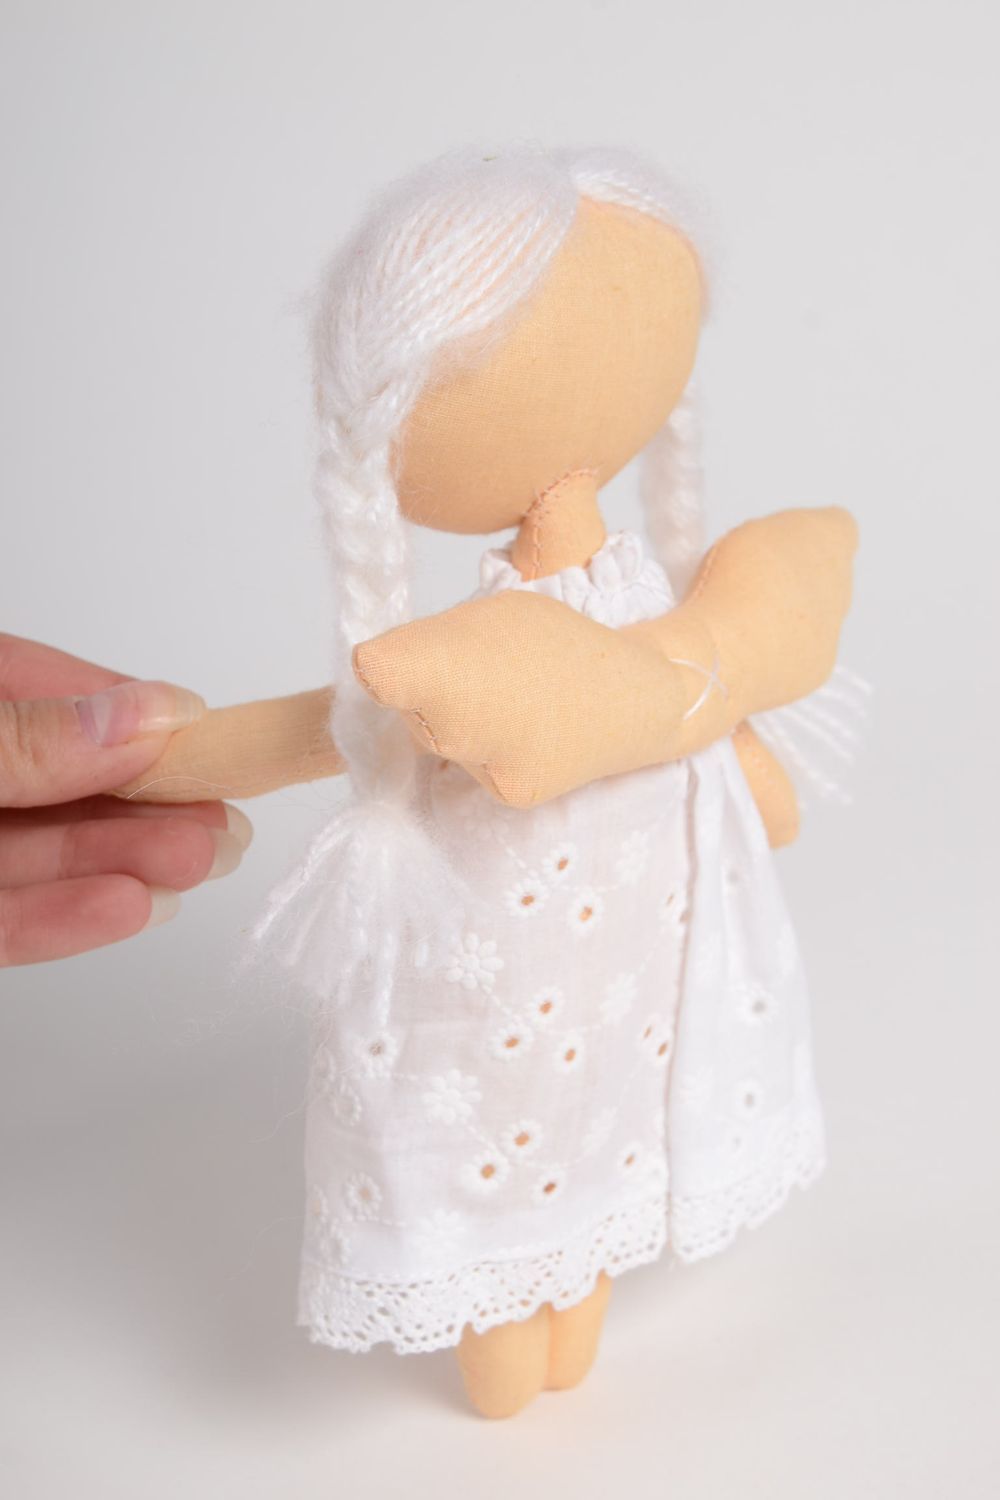 Handmade toy designer doll for girls gift ideas nursery decor fabric doll photo 4